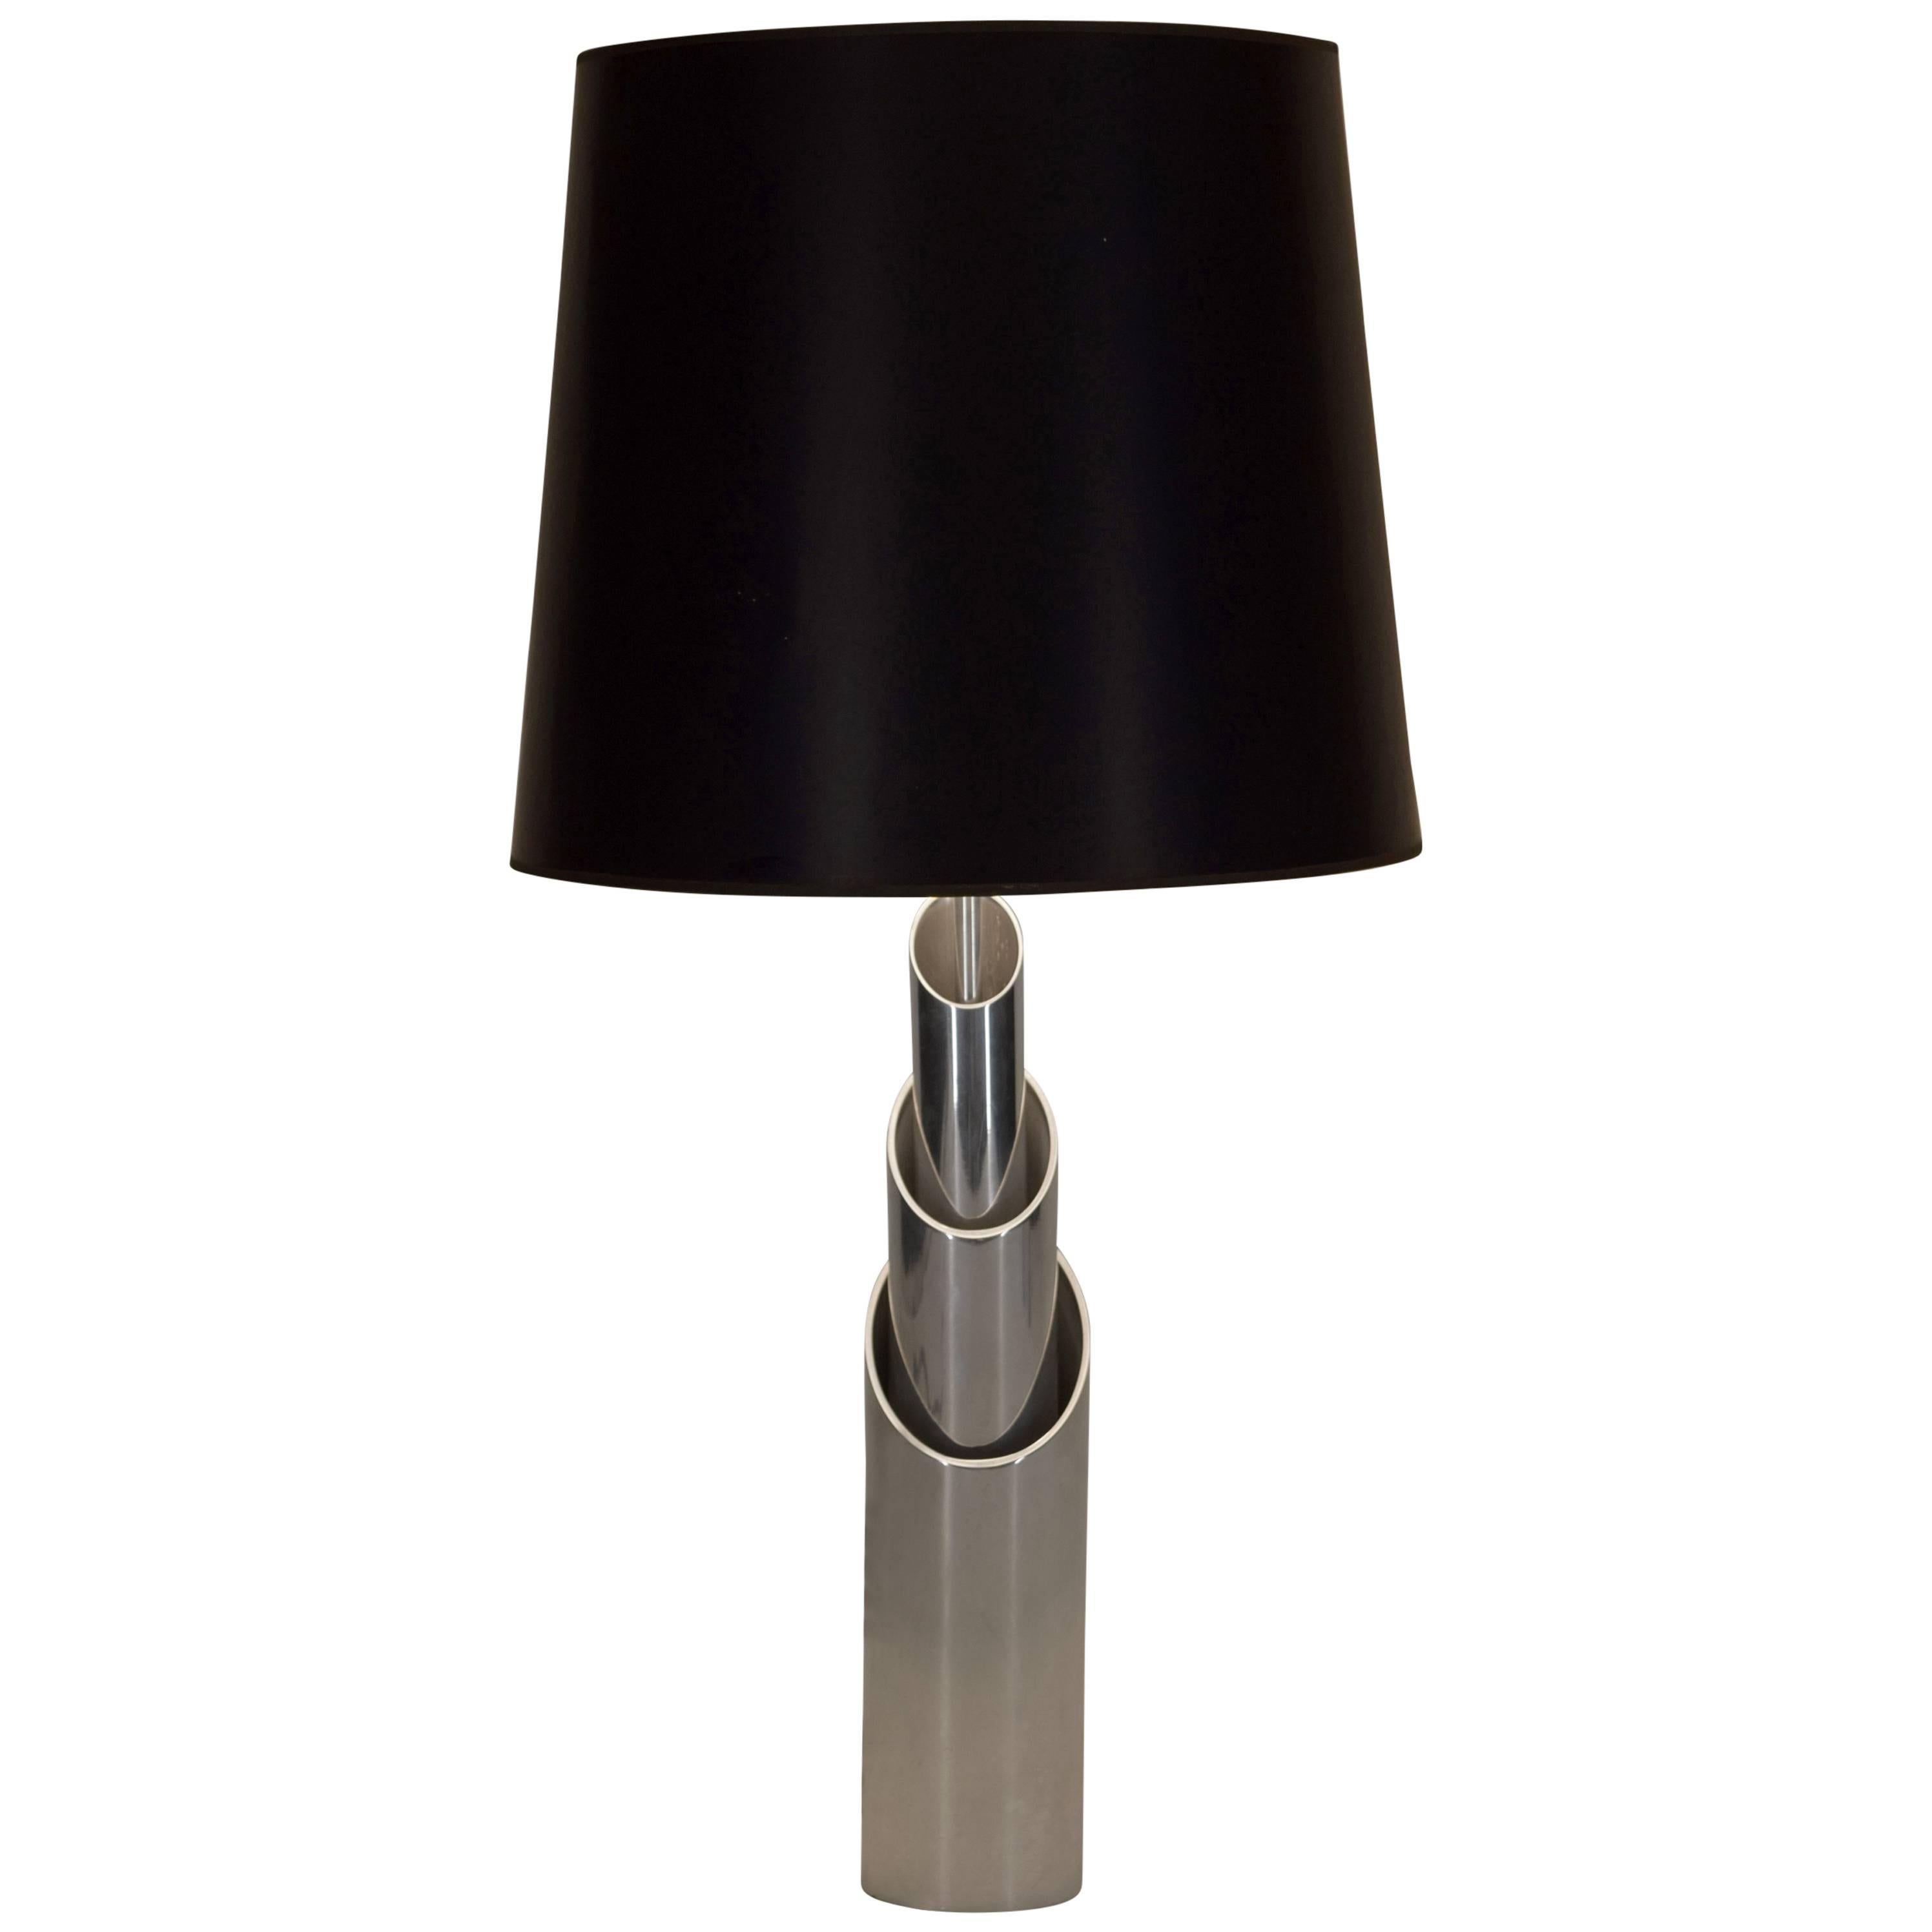 Modernist Table Lamp after Vladimir Kagan by Laurel Lamp Company